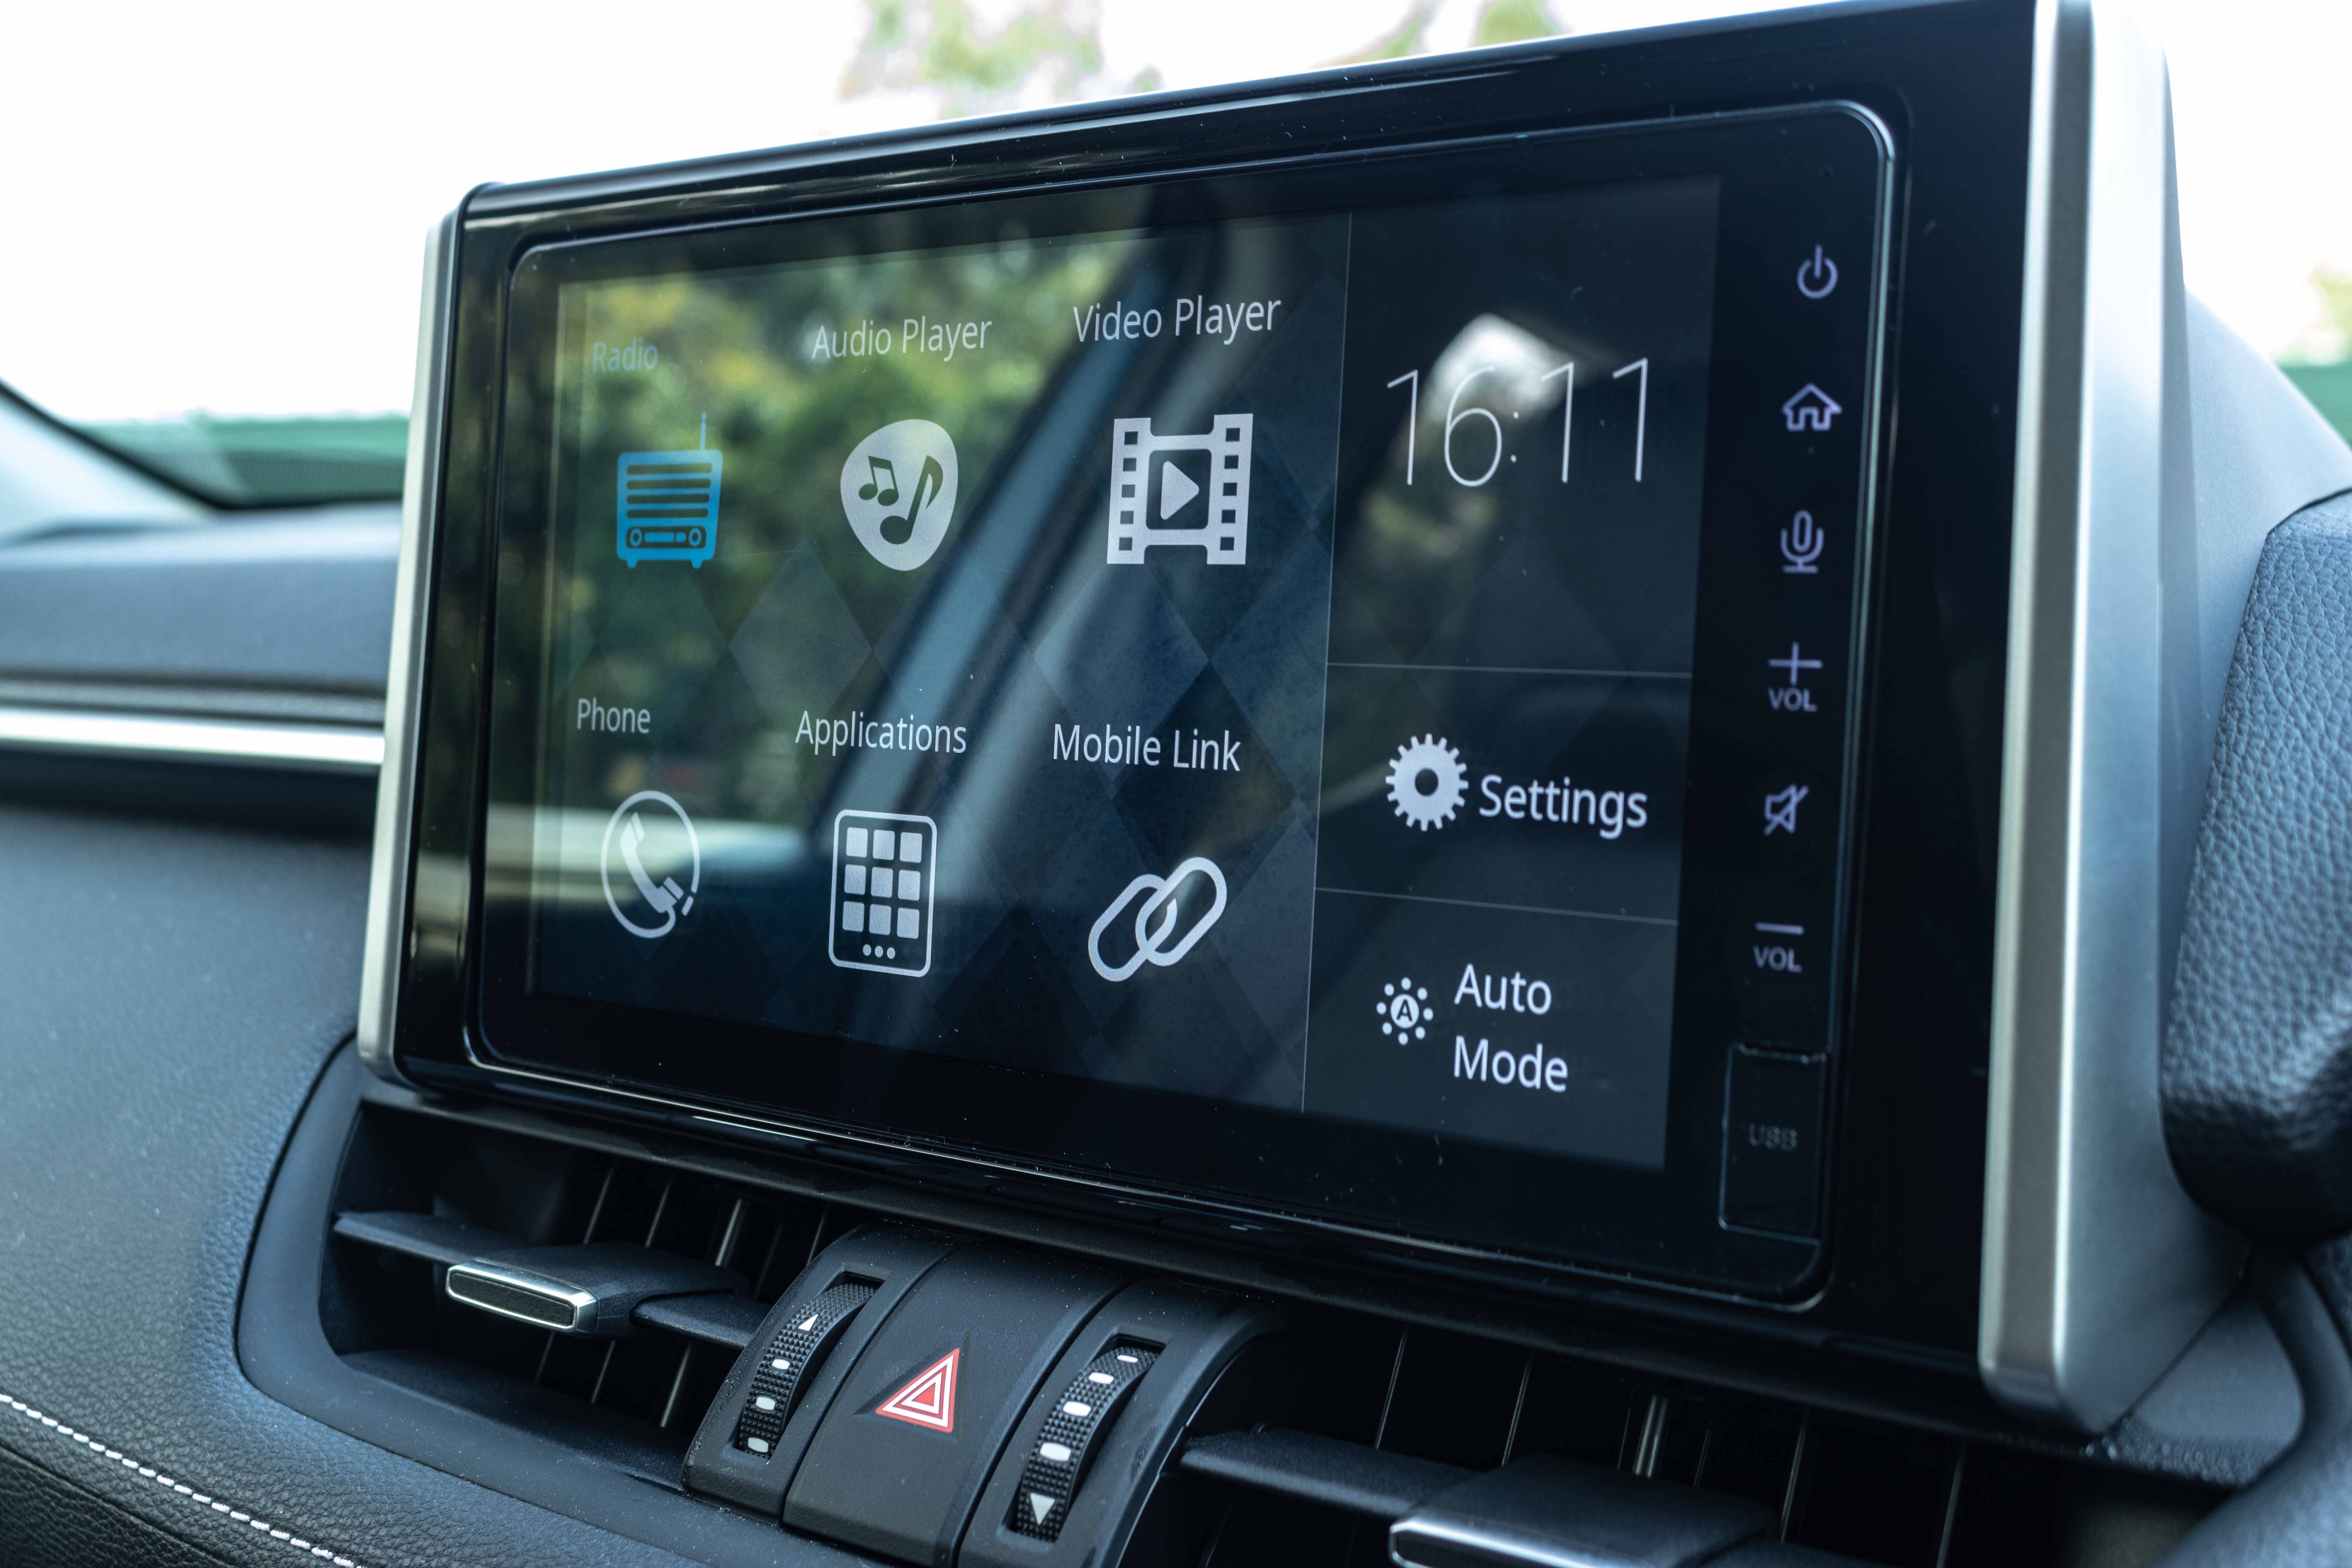 2022 Toyota RAV4 Hybrid Singapore - Infotainment screen